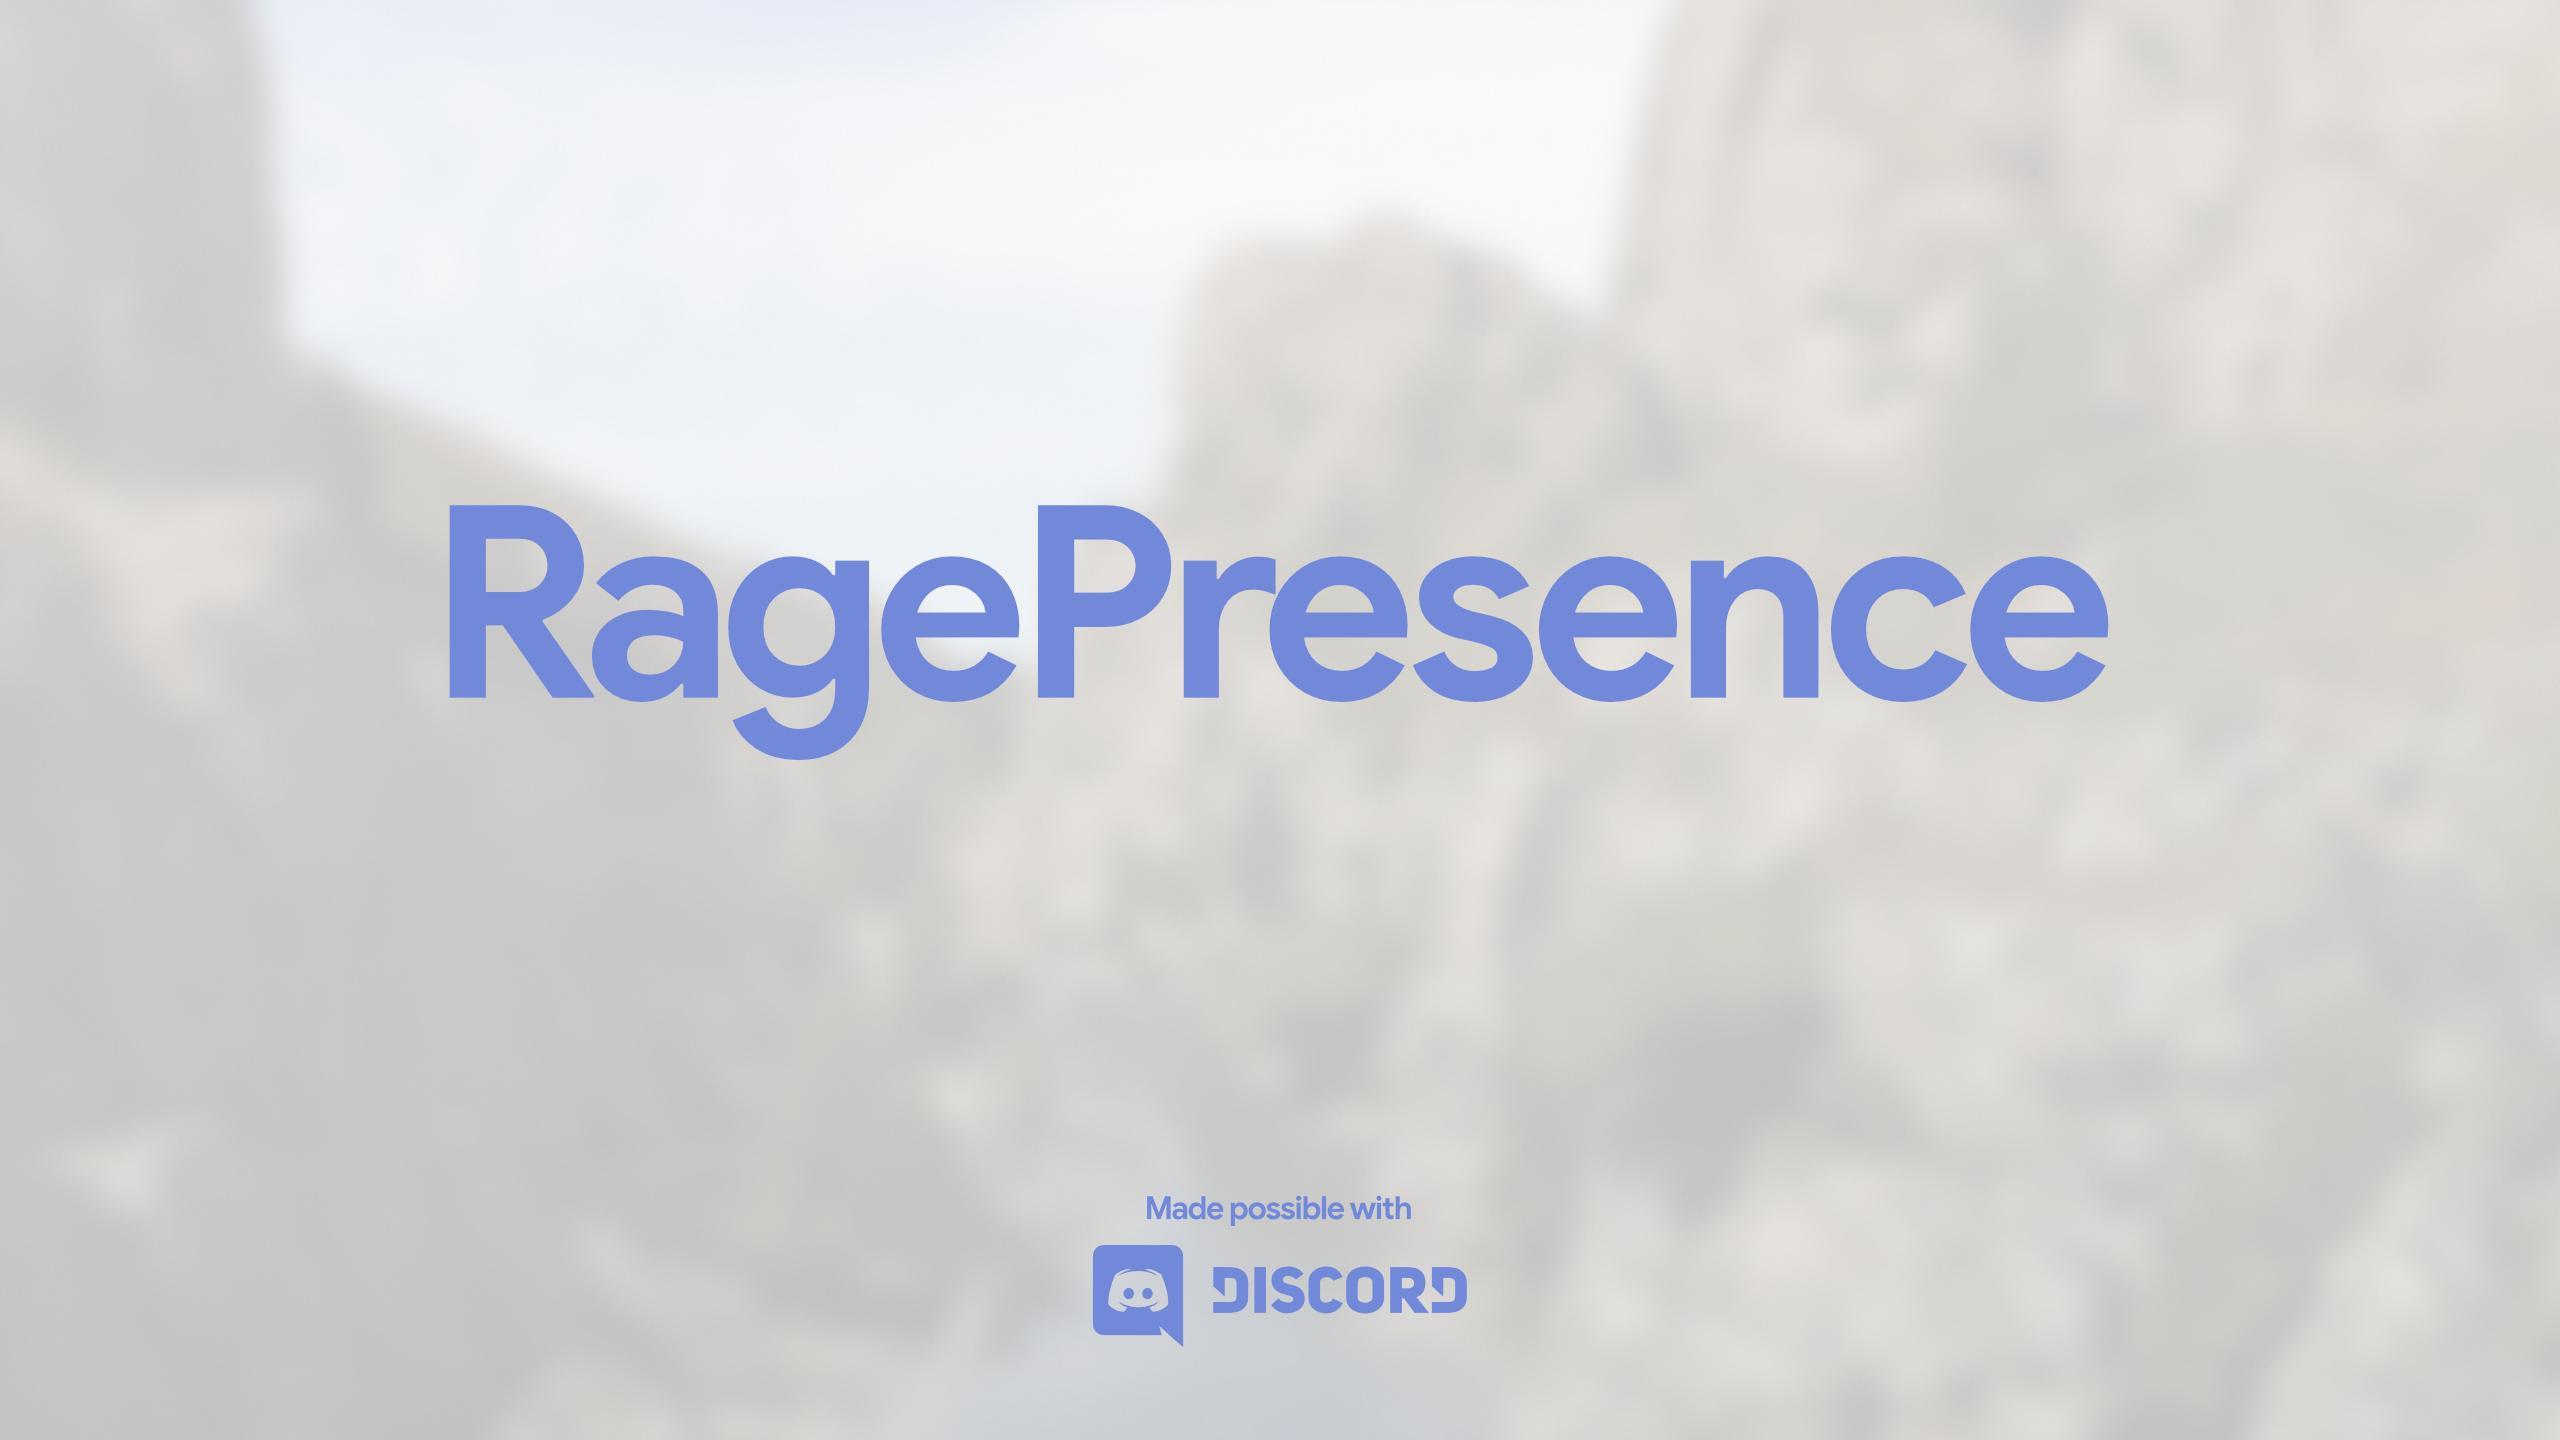 RagePresence - Discord Rich Presence Support [.NET]